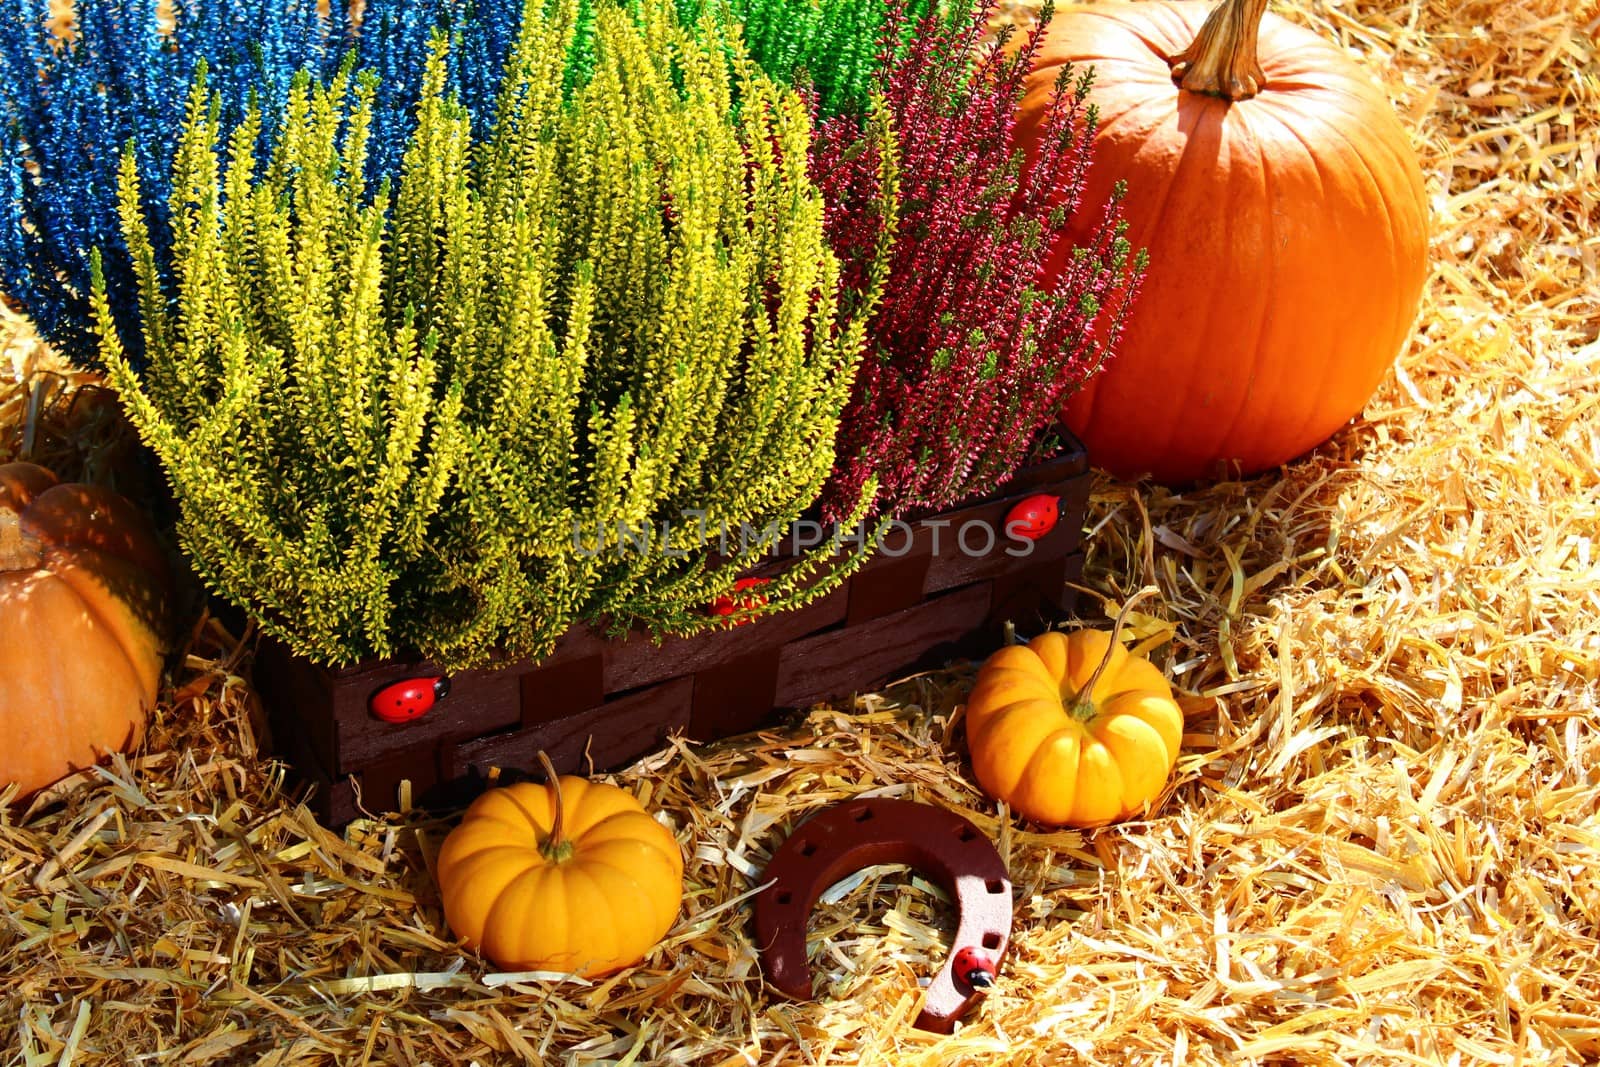 heather flowers and pumpkins in the straw by martina_unbehauen